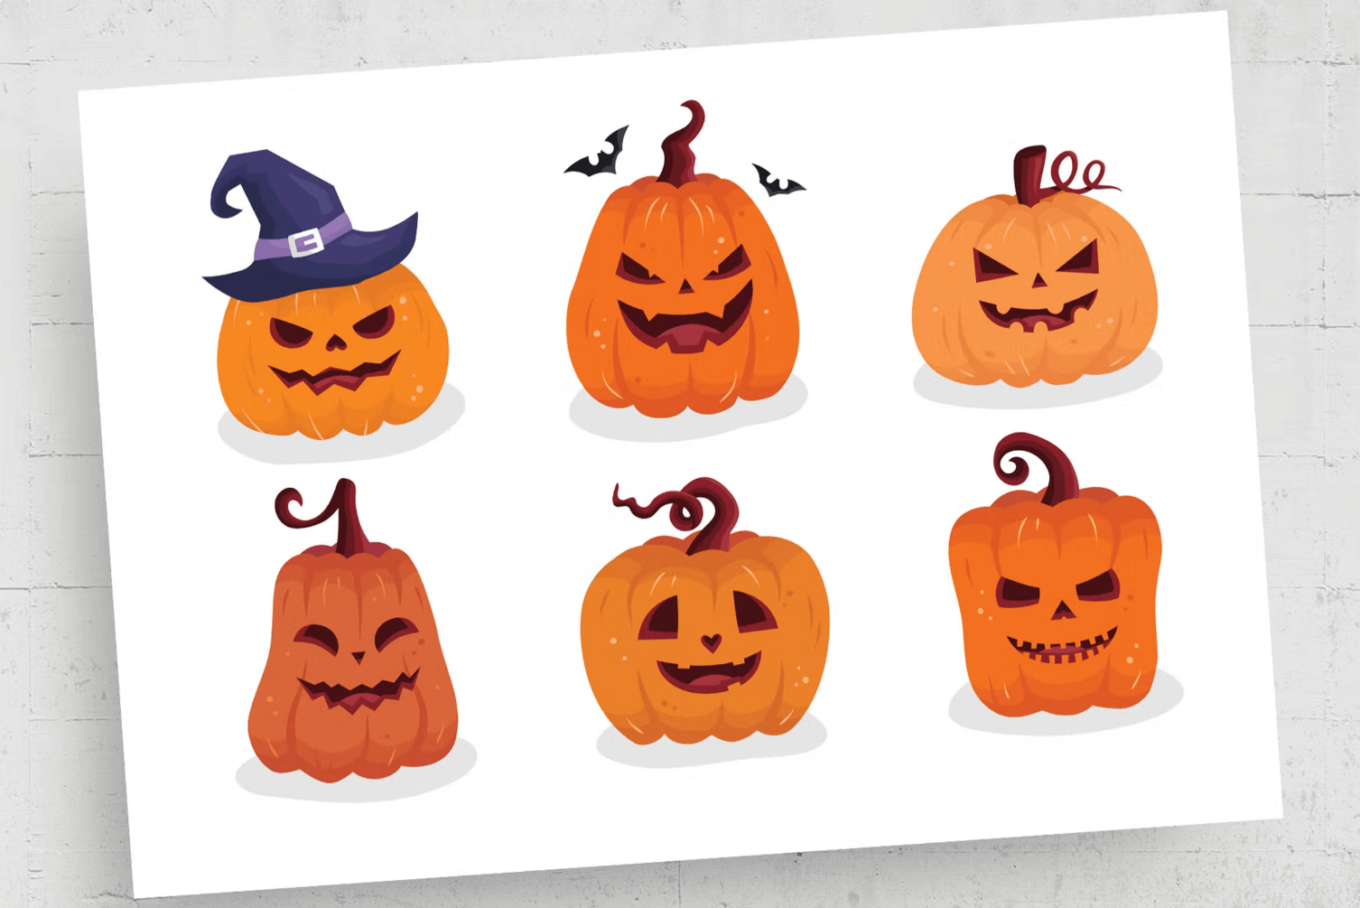 Image of six Halloween pumpkins/ jack-o-lanterns on a white background.